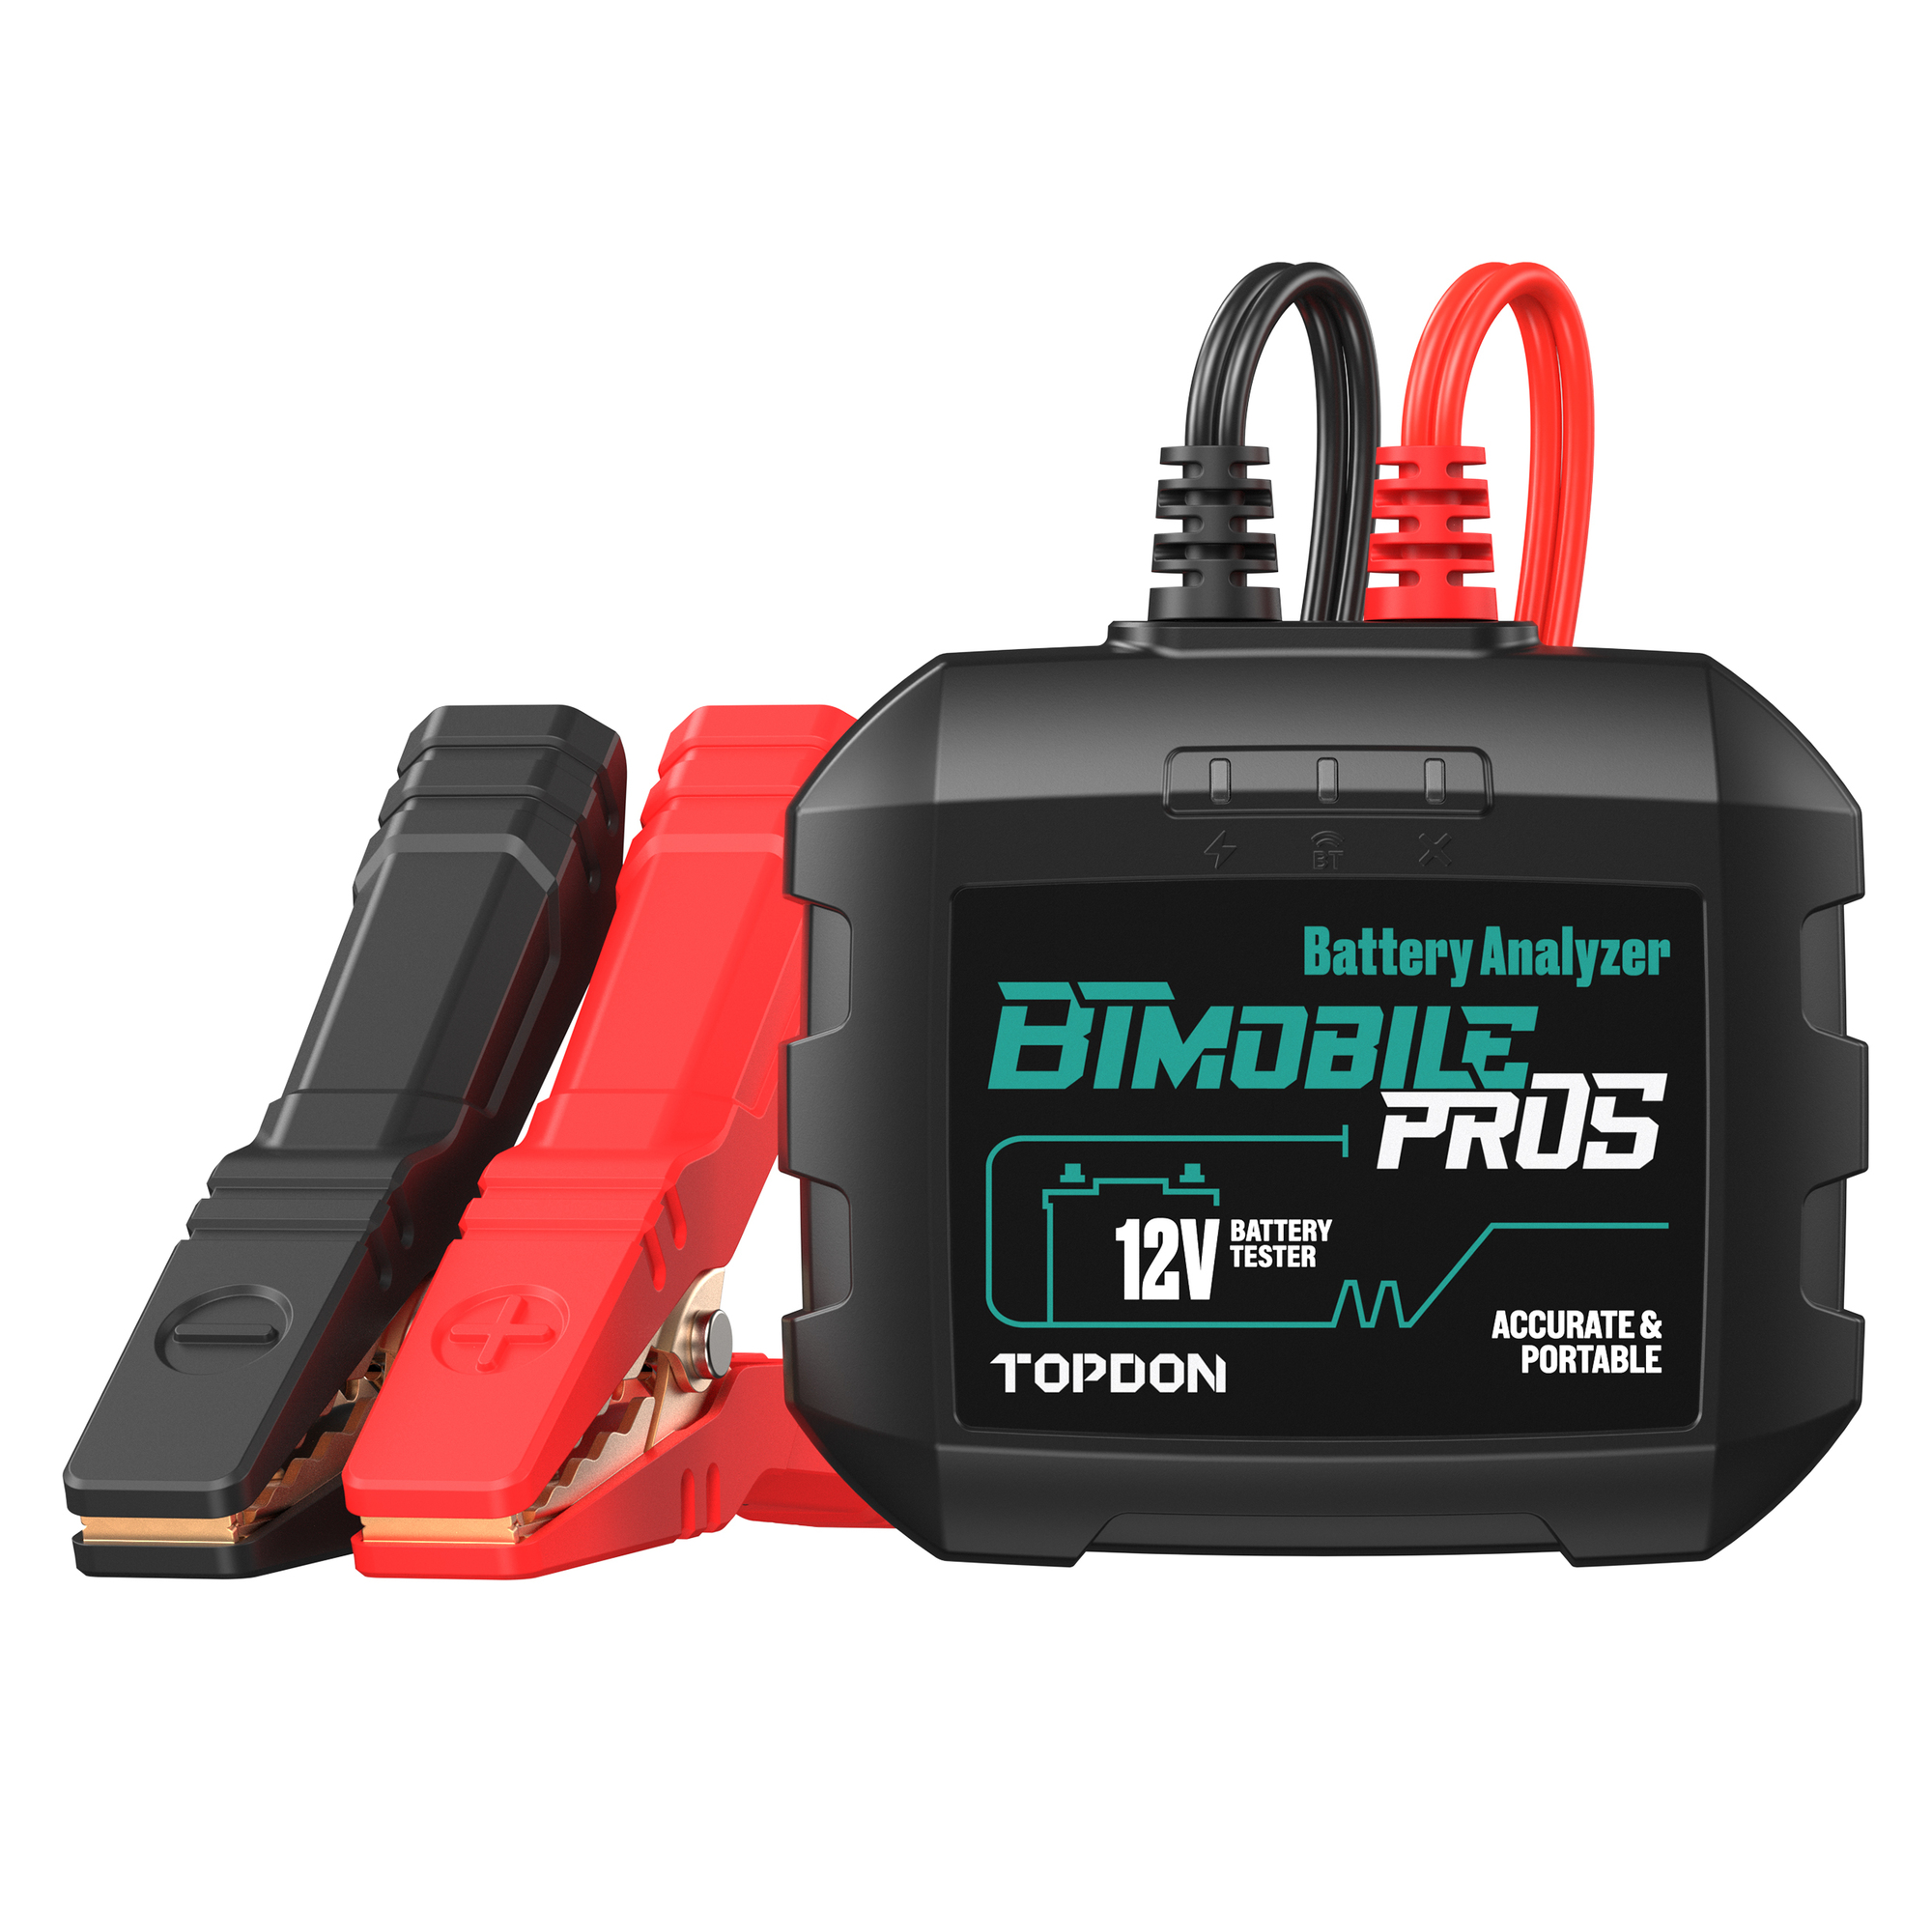 TOPDON, 12V Battery Charger Tester w/ Bluetooth, Model BT Mobile ProS